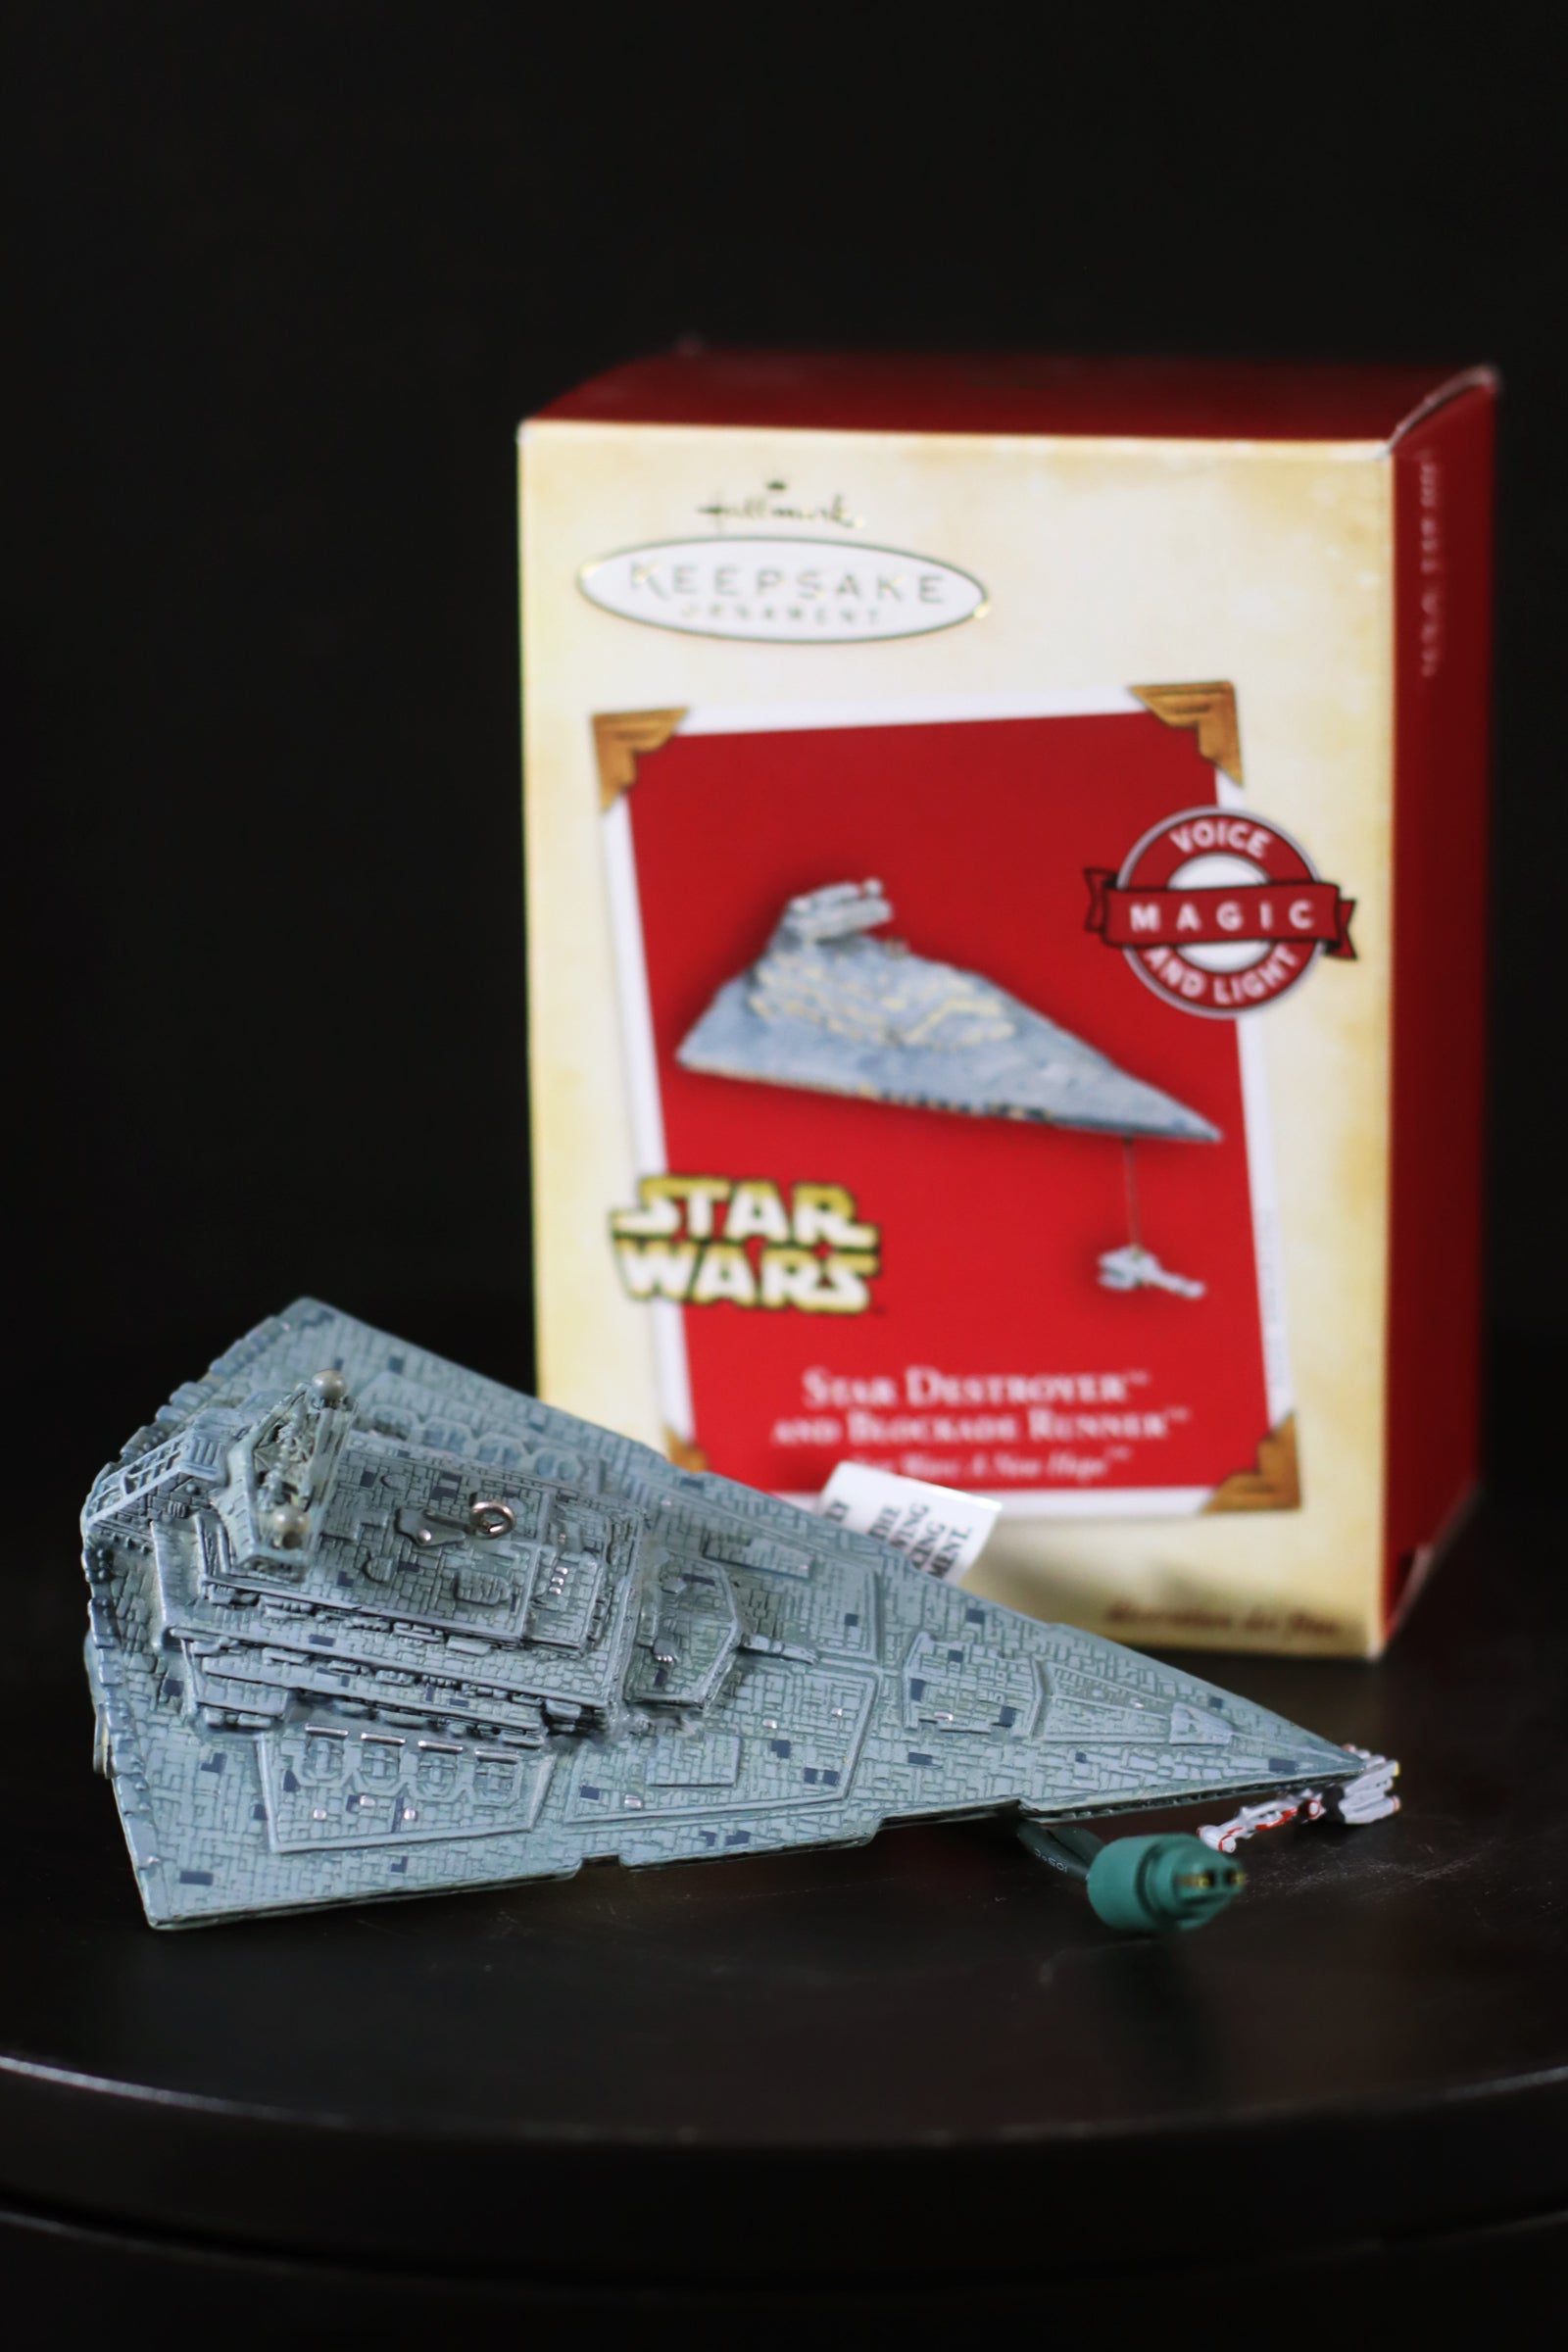 Star Wars: Star Destroyer and Blockade Runner Keepsake Ornament Hallmark